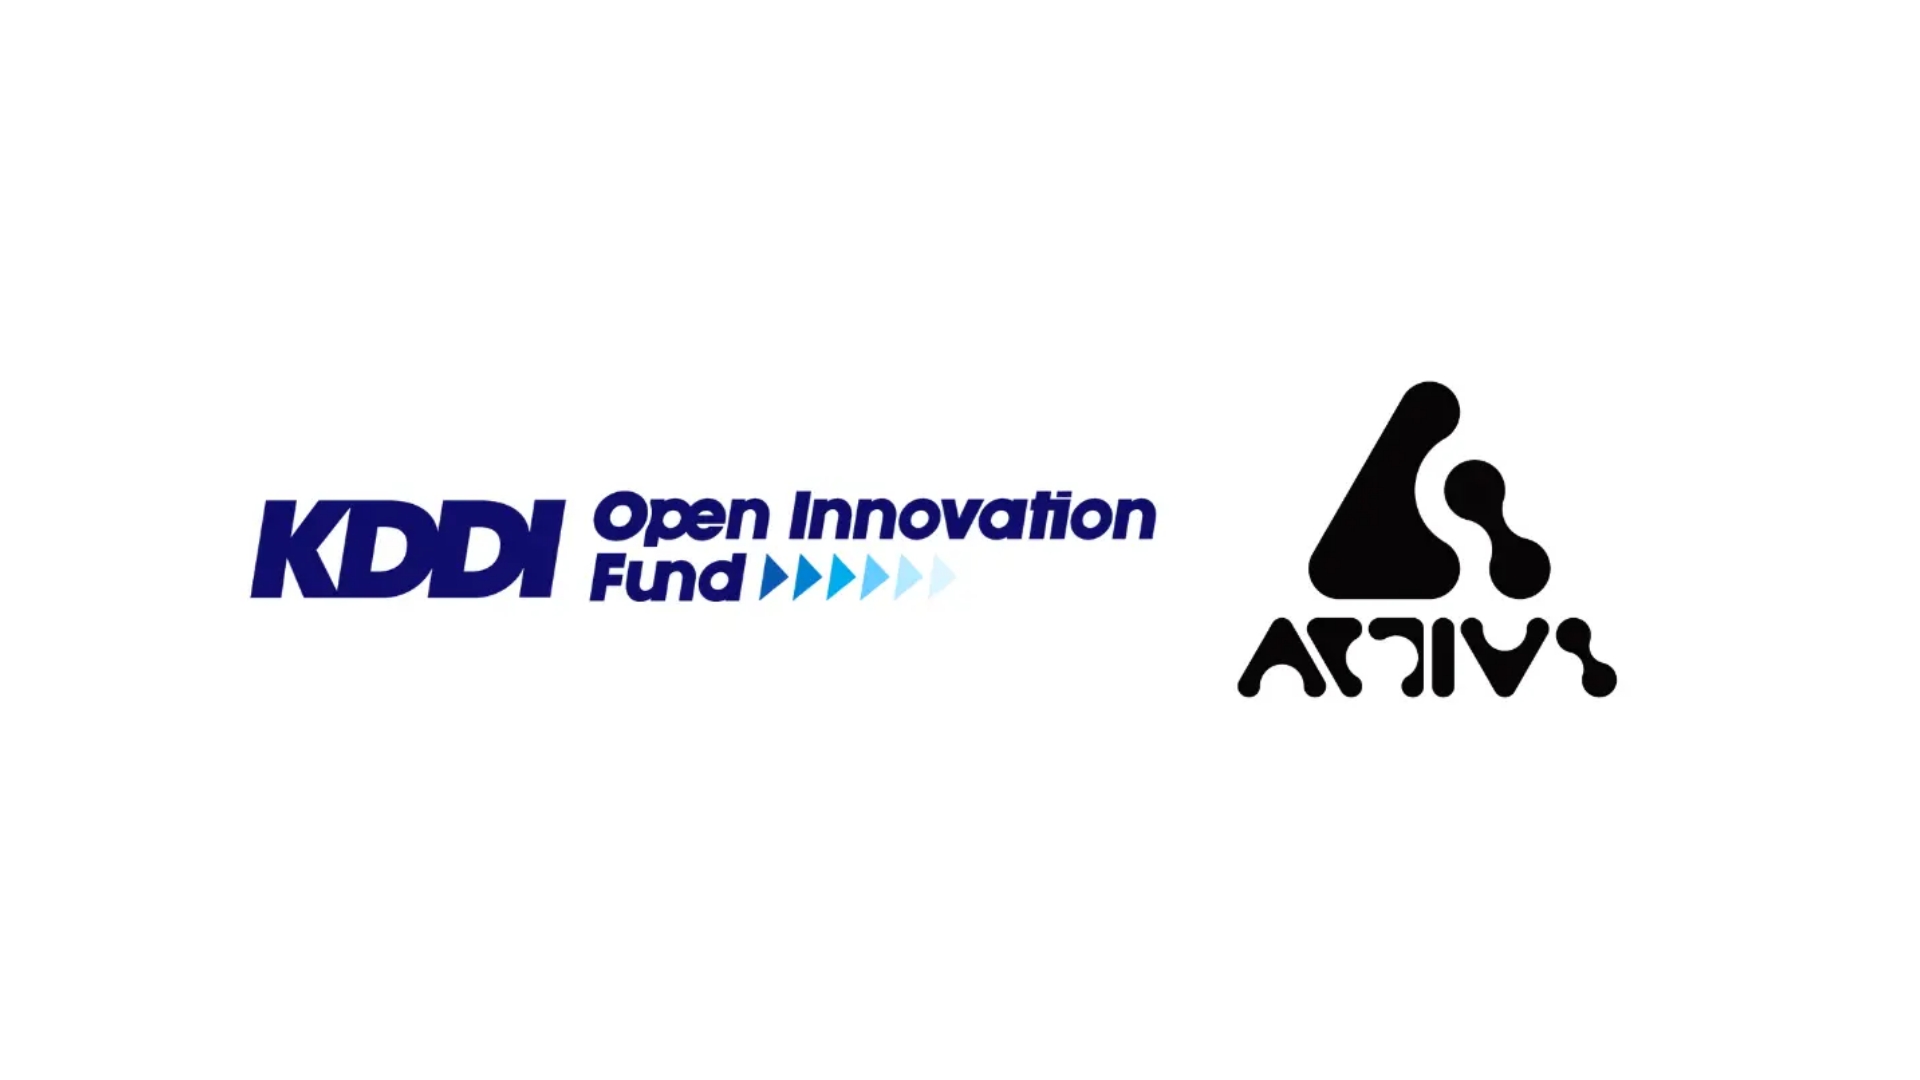 Activ8株式会社がKDDI Open Innovation Fund 3号より資金調達を実施